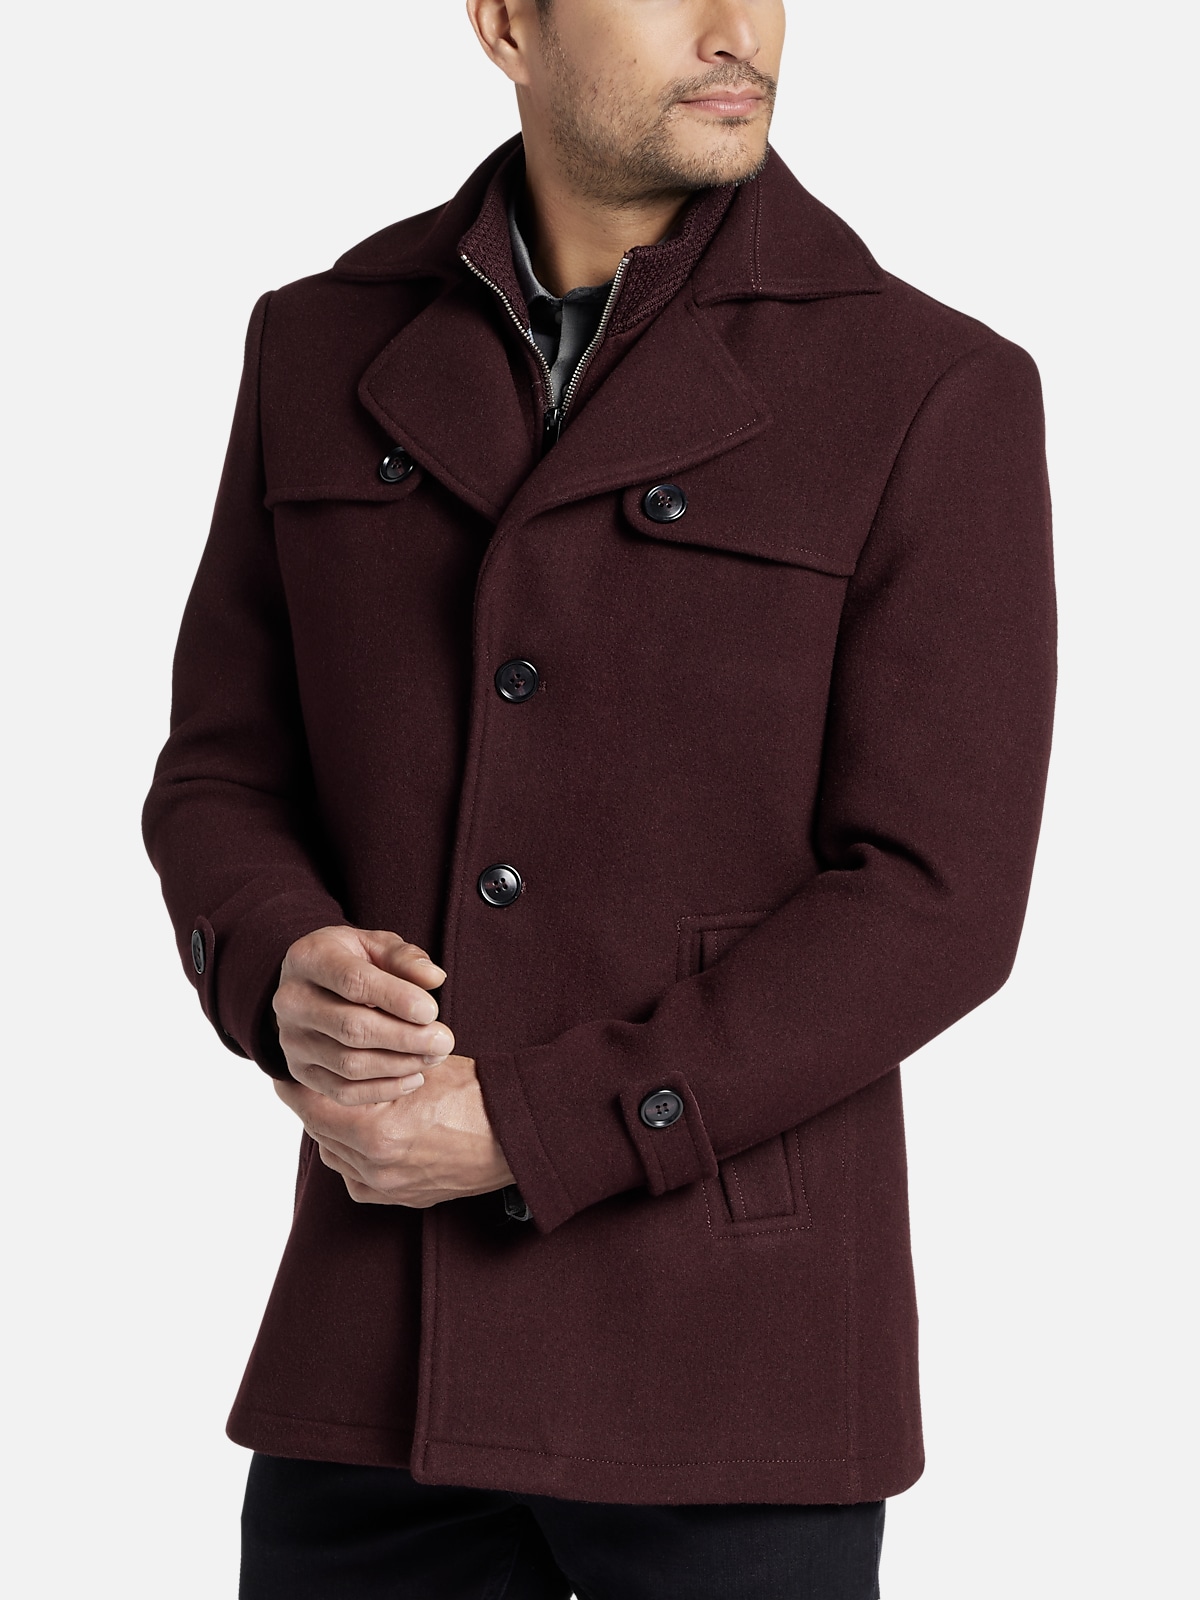 Michael Strahan Modern Fit Jacket with Bib Vest | All Sale| Men's Wearhouse